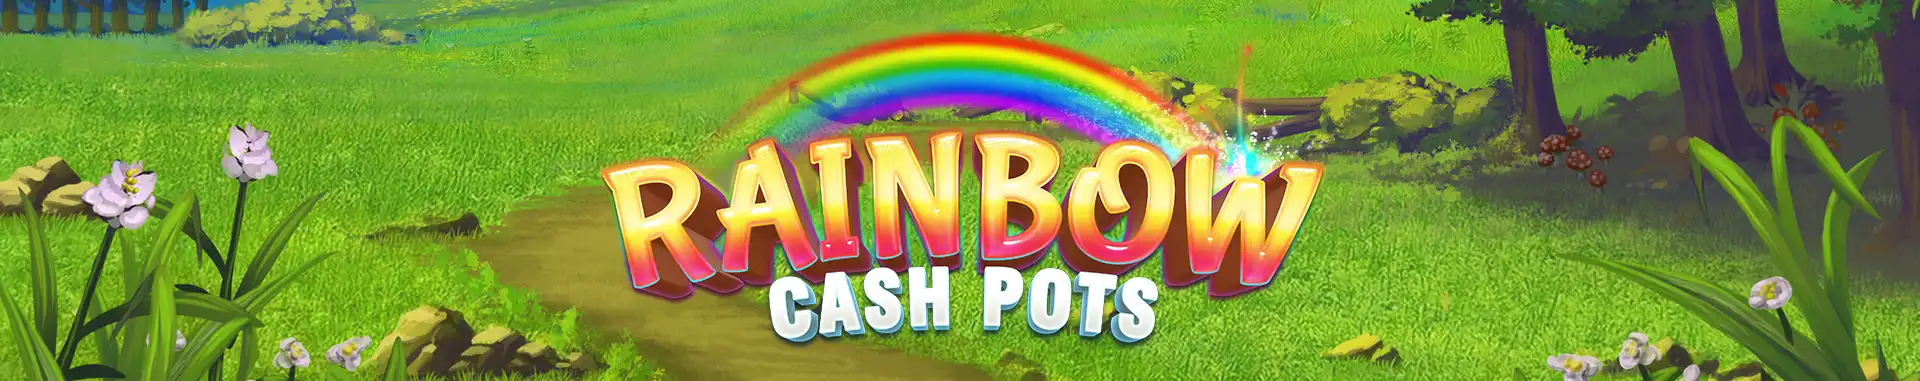 Tragaperras online Rainbow Cash Pots